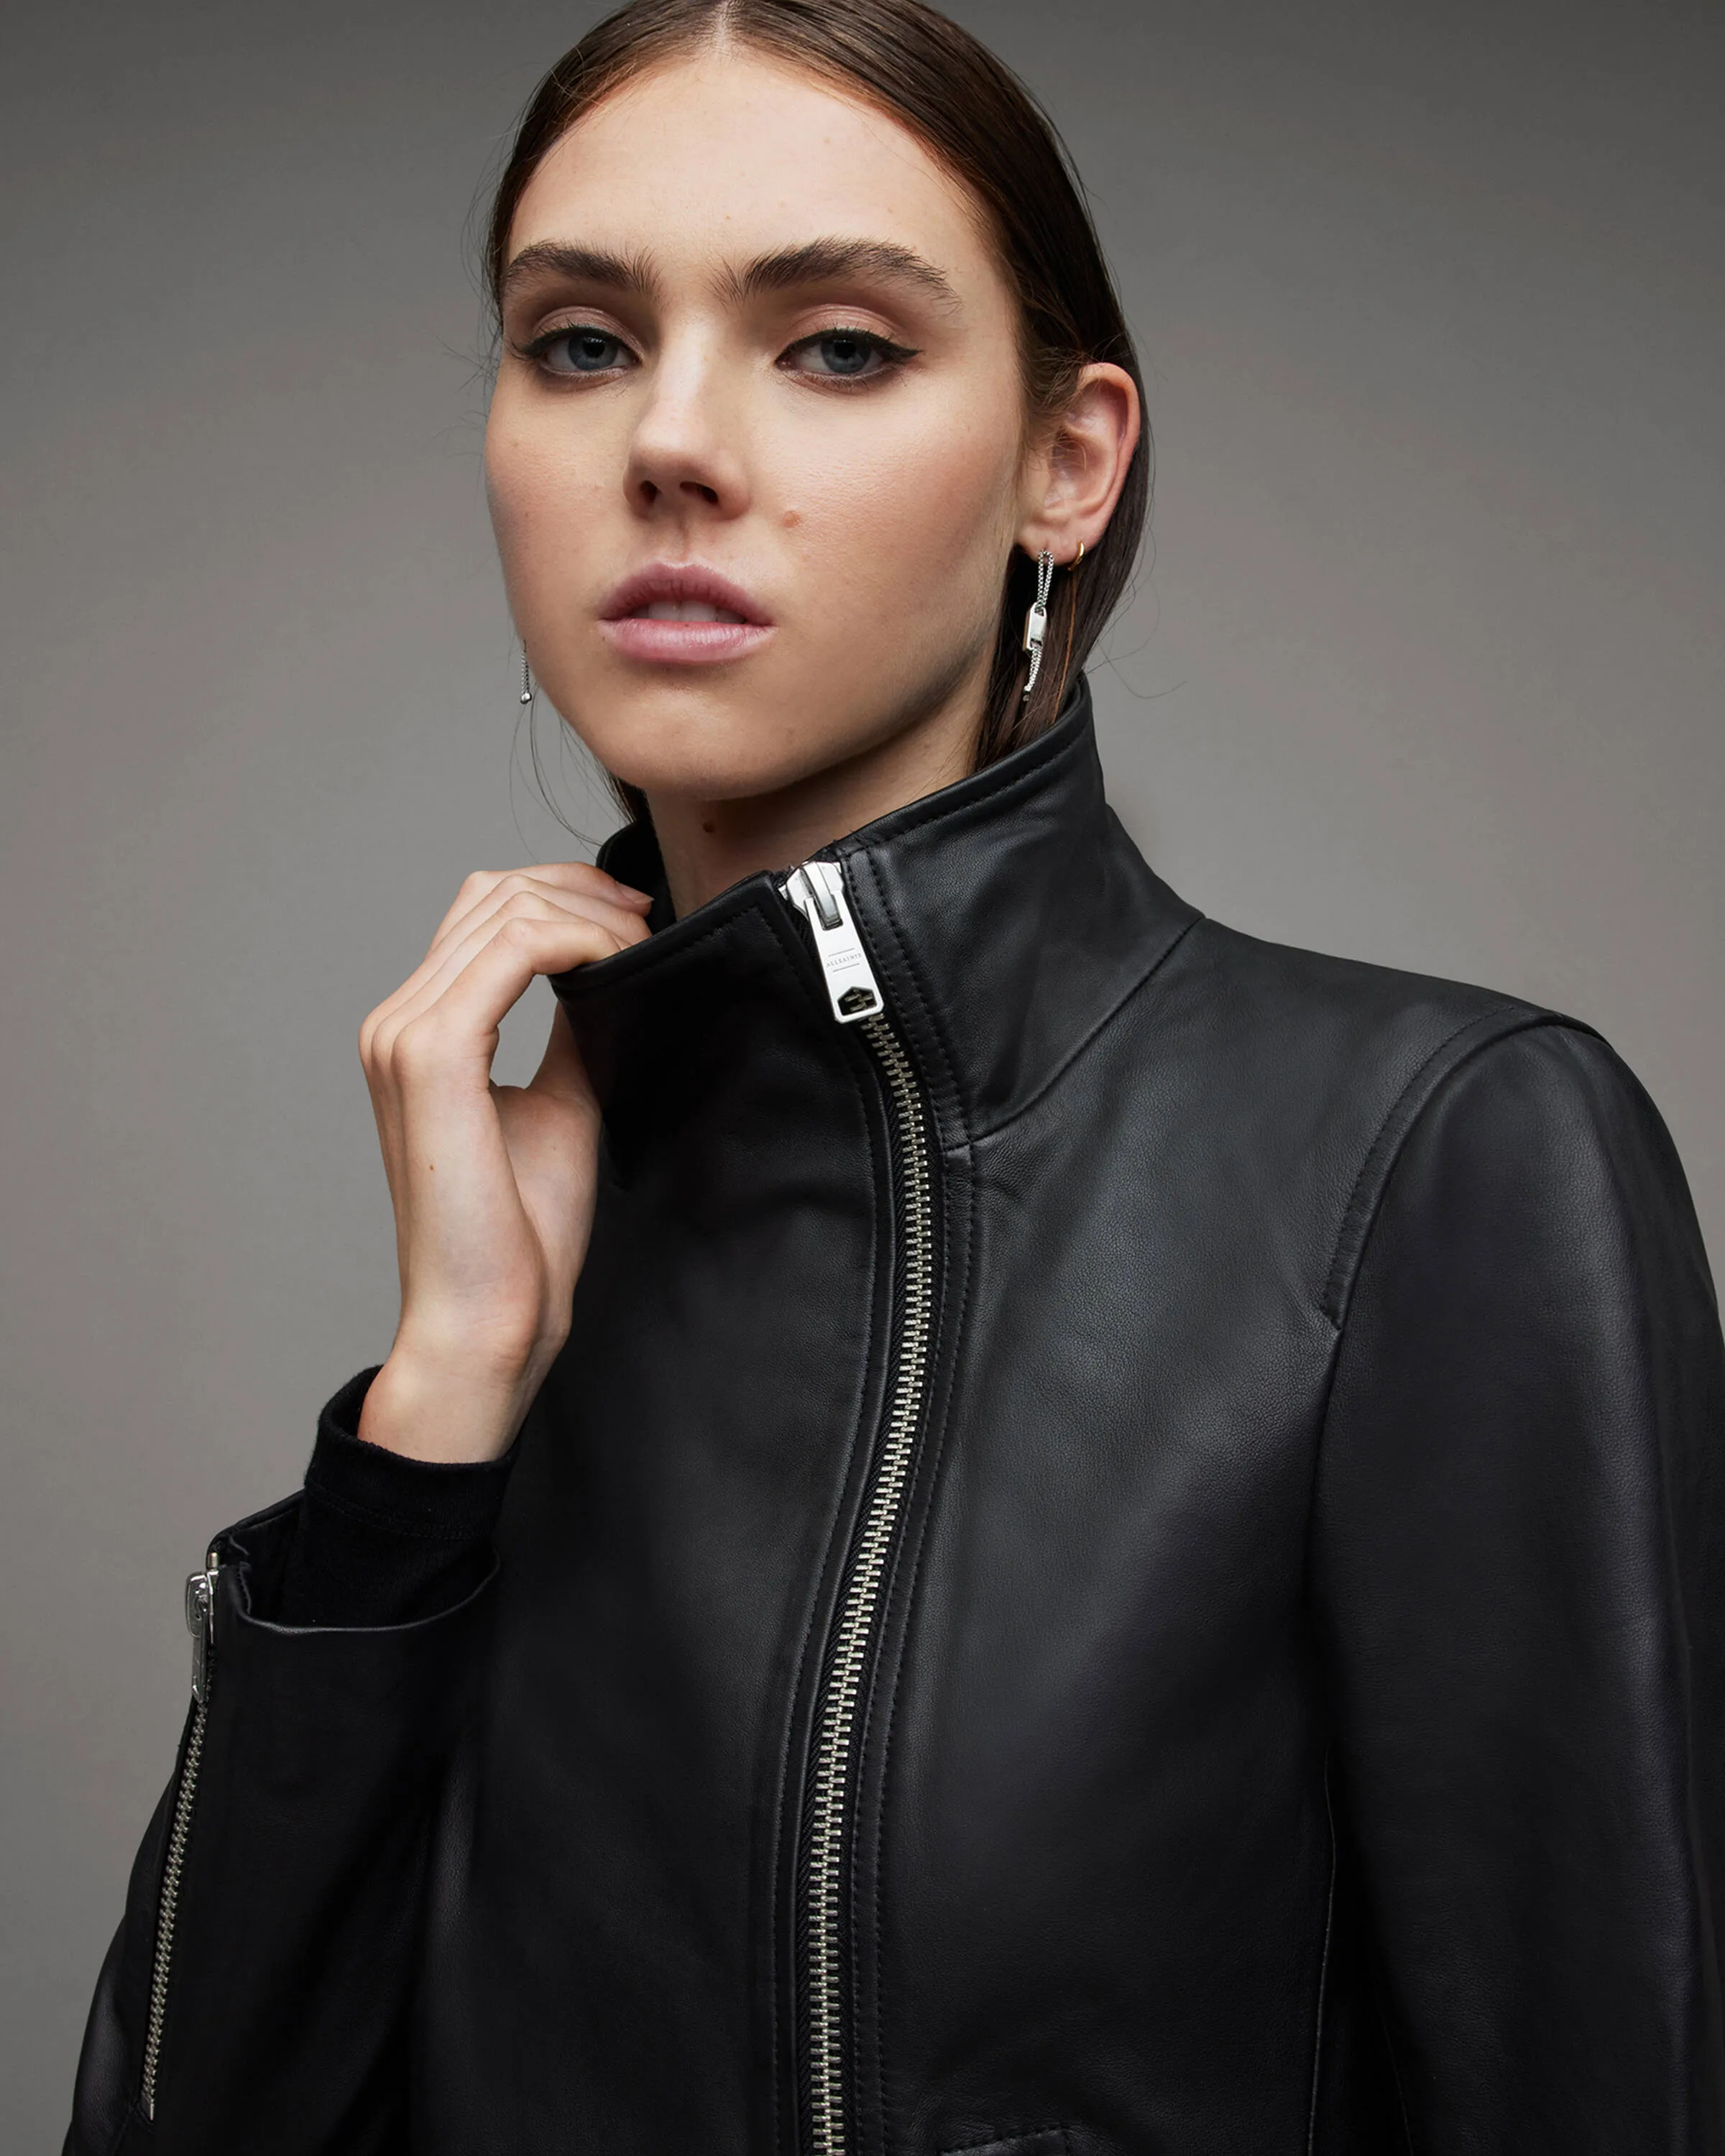 Women's Dalby Leather Jacket